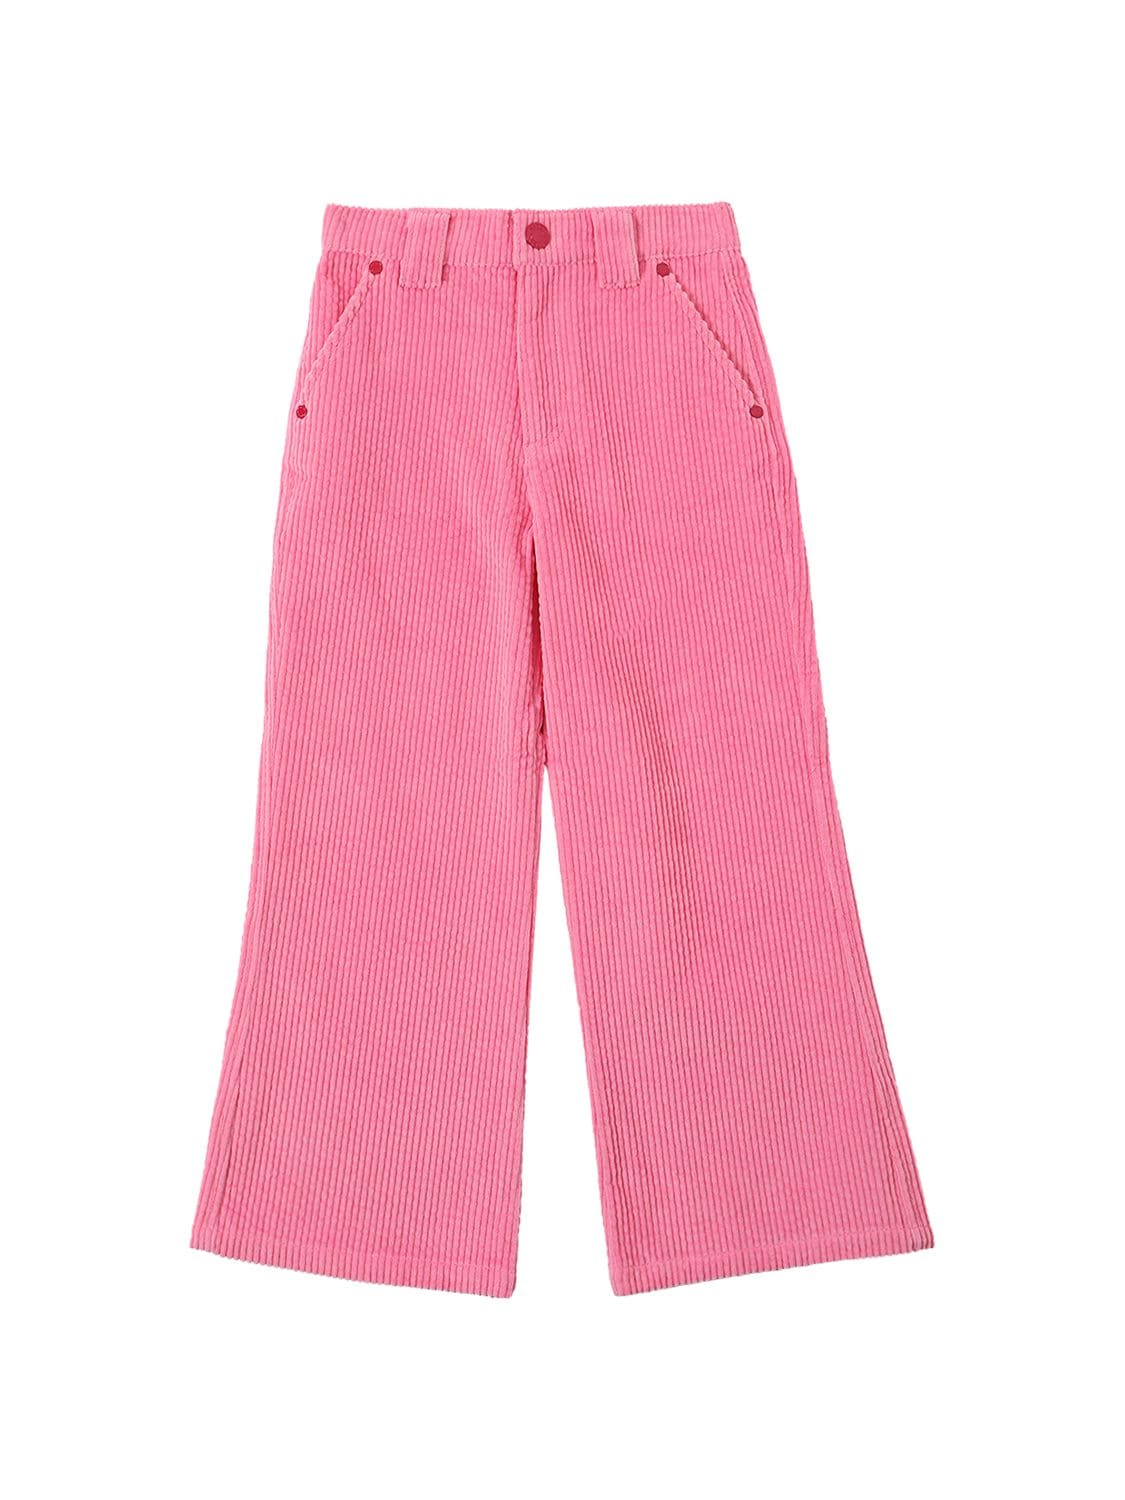 Image of Cotton Corduroy Pants